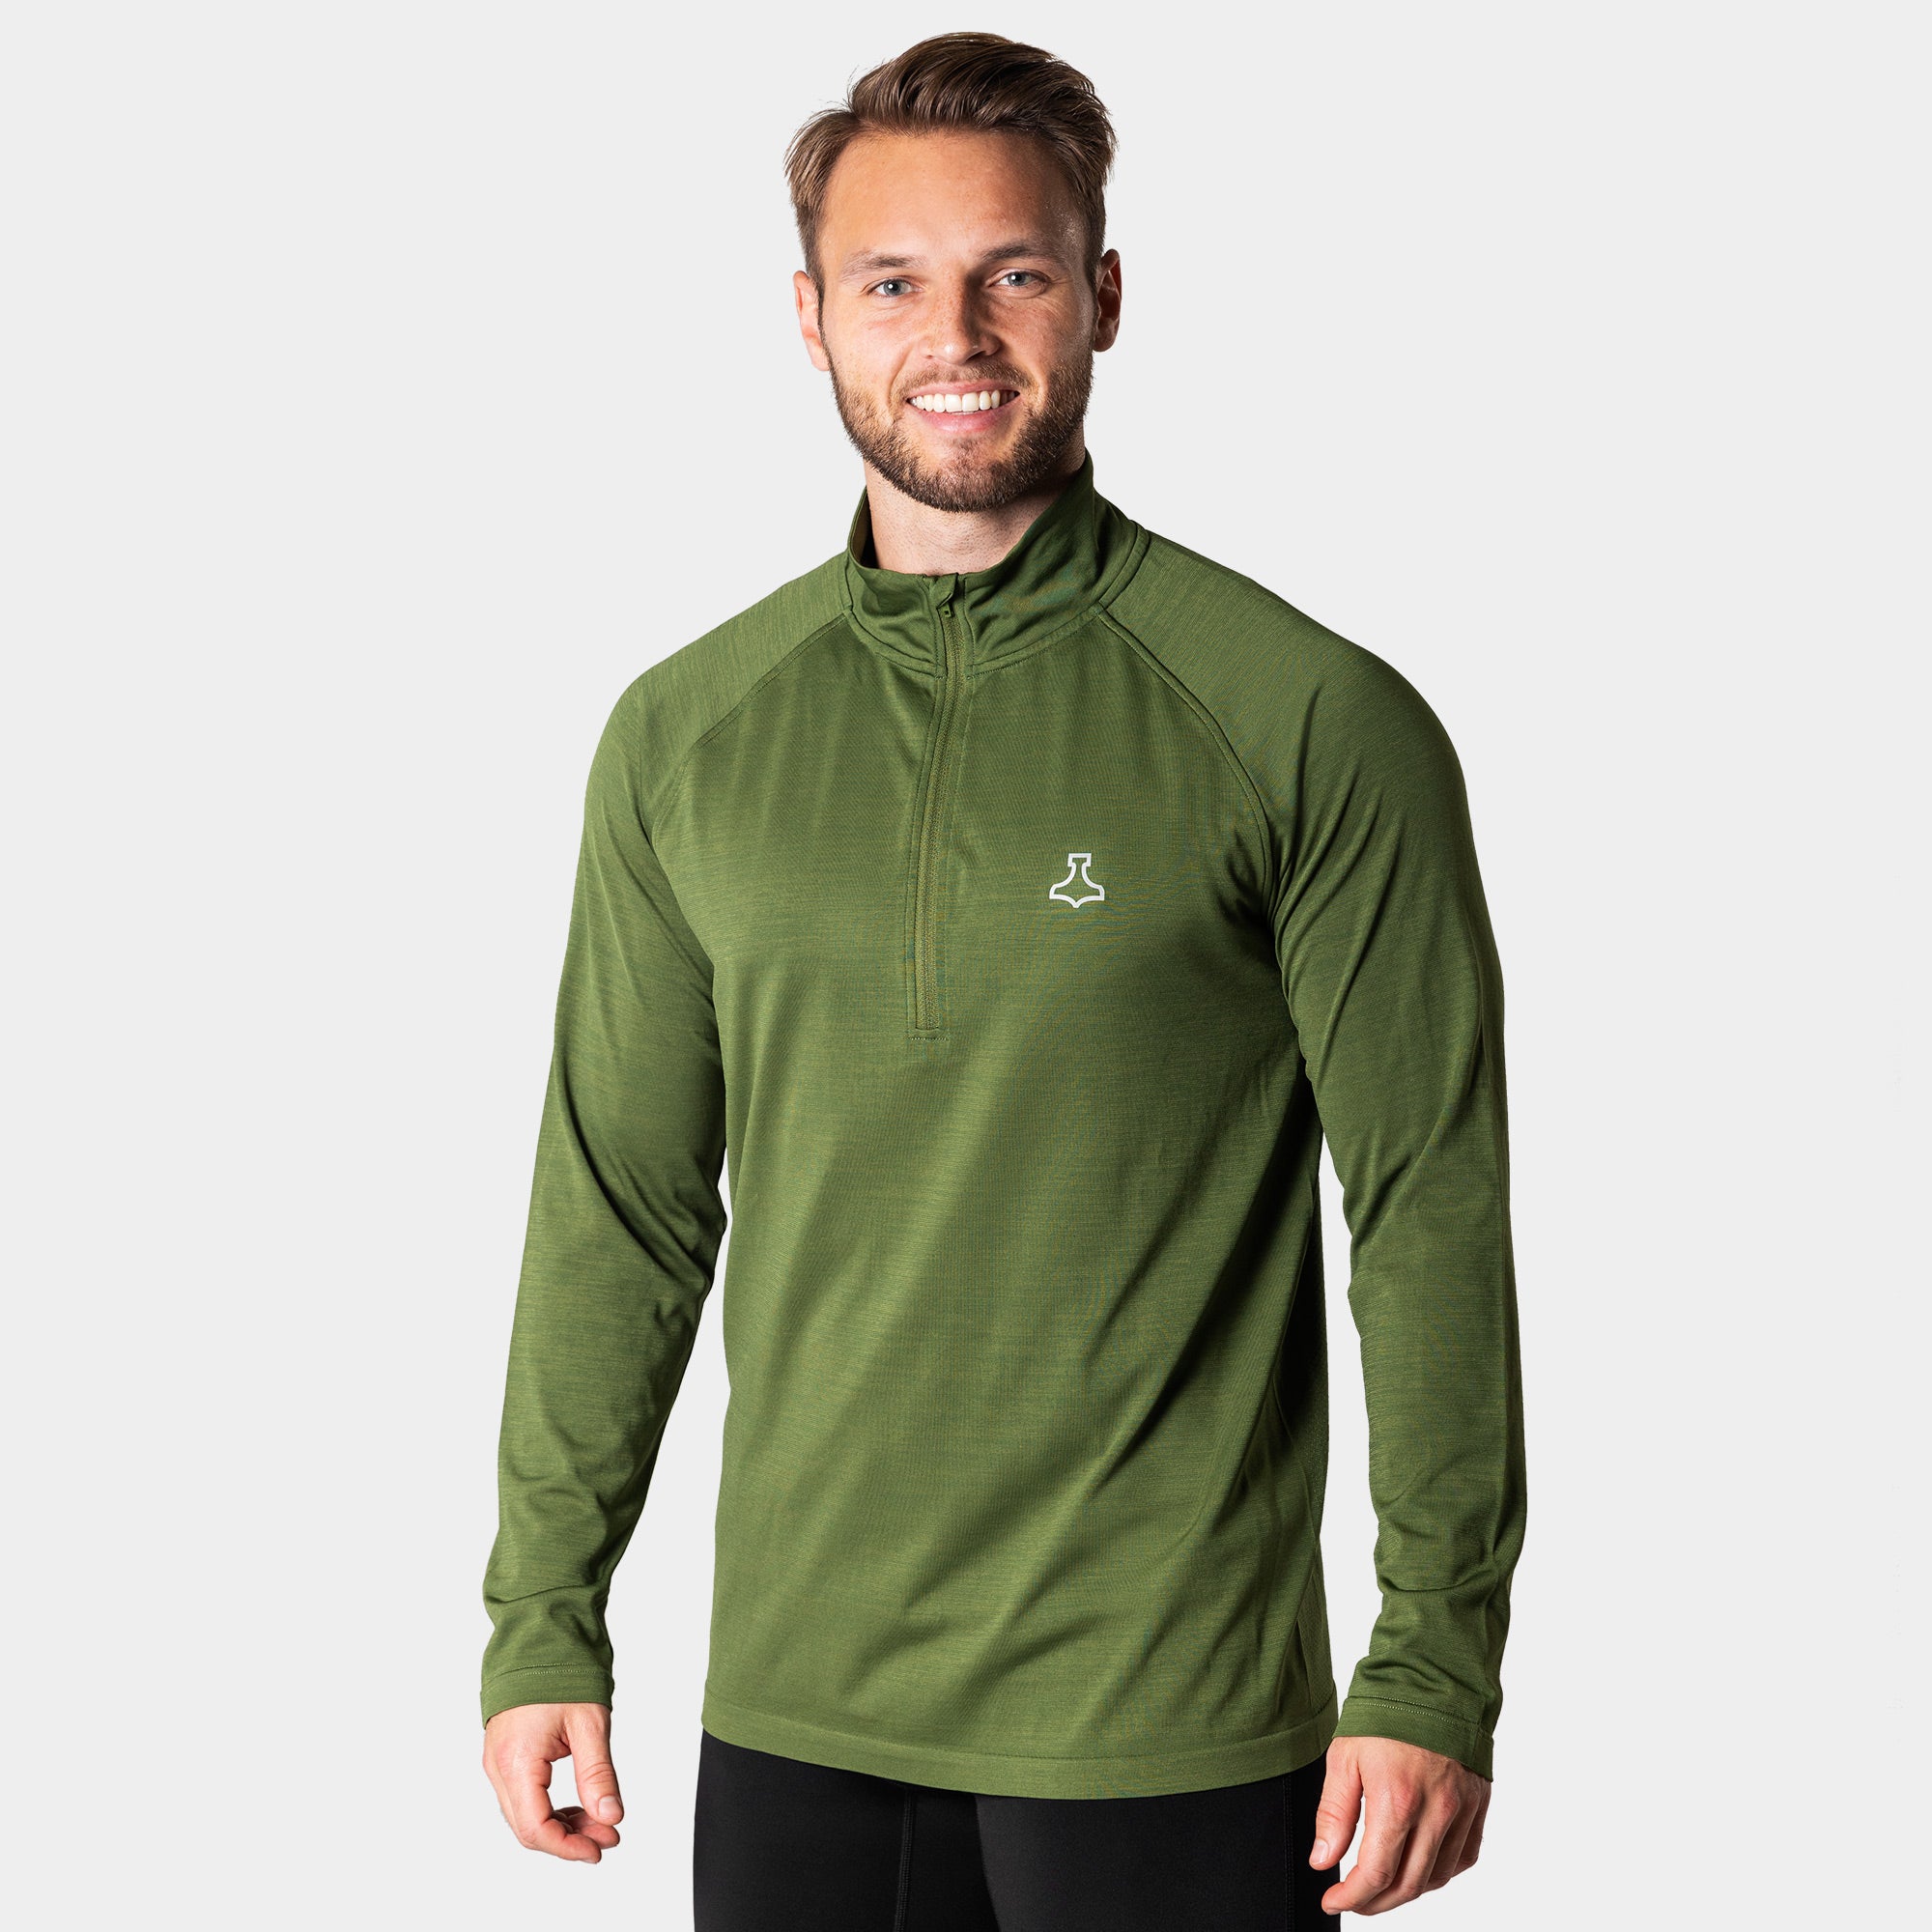 Se liiteGuard Zip-trøje | Grøn | Str. L | Mænd hos liiteGuard